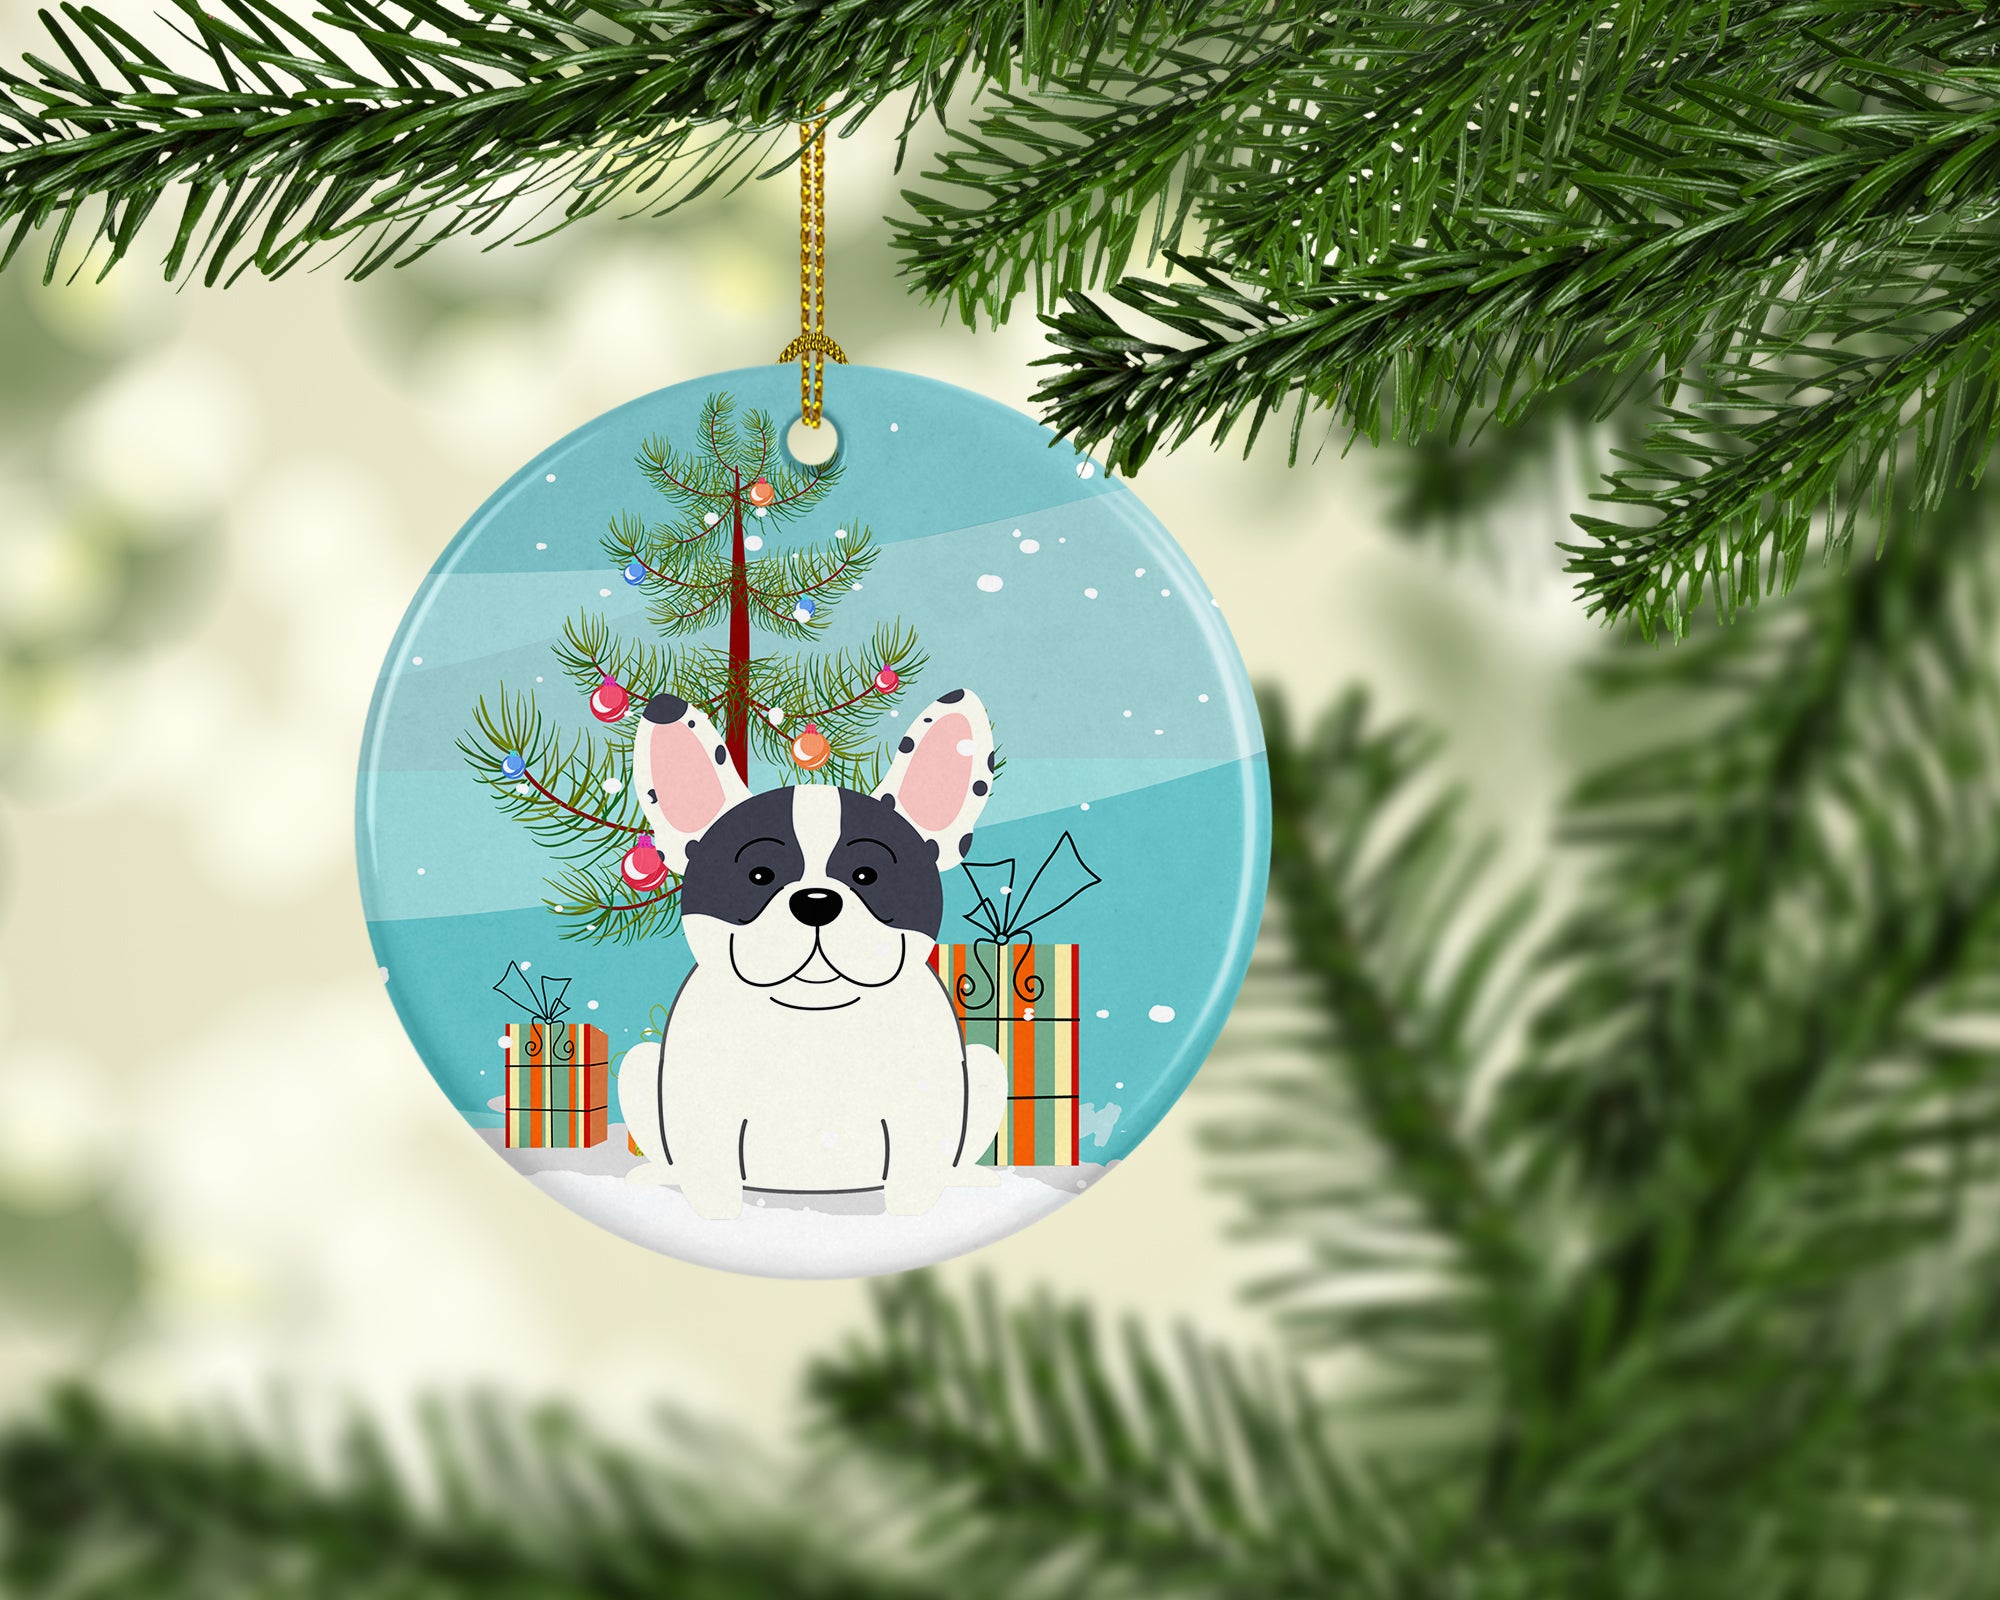 Merry Christmas Tree French Bulldog Piebald Ceramic Ornament BB4136CO1 - the-store.com